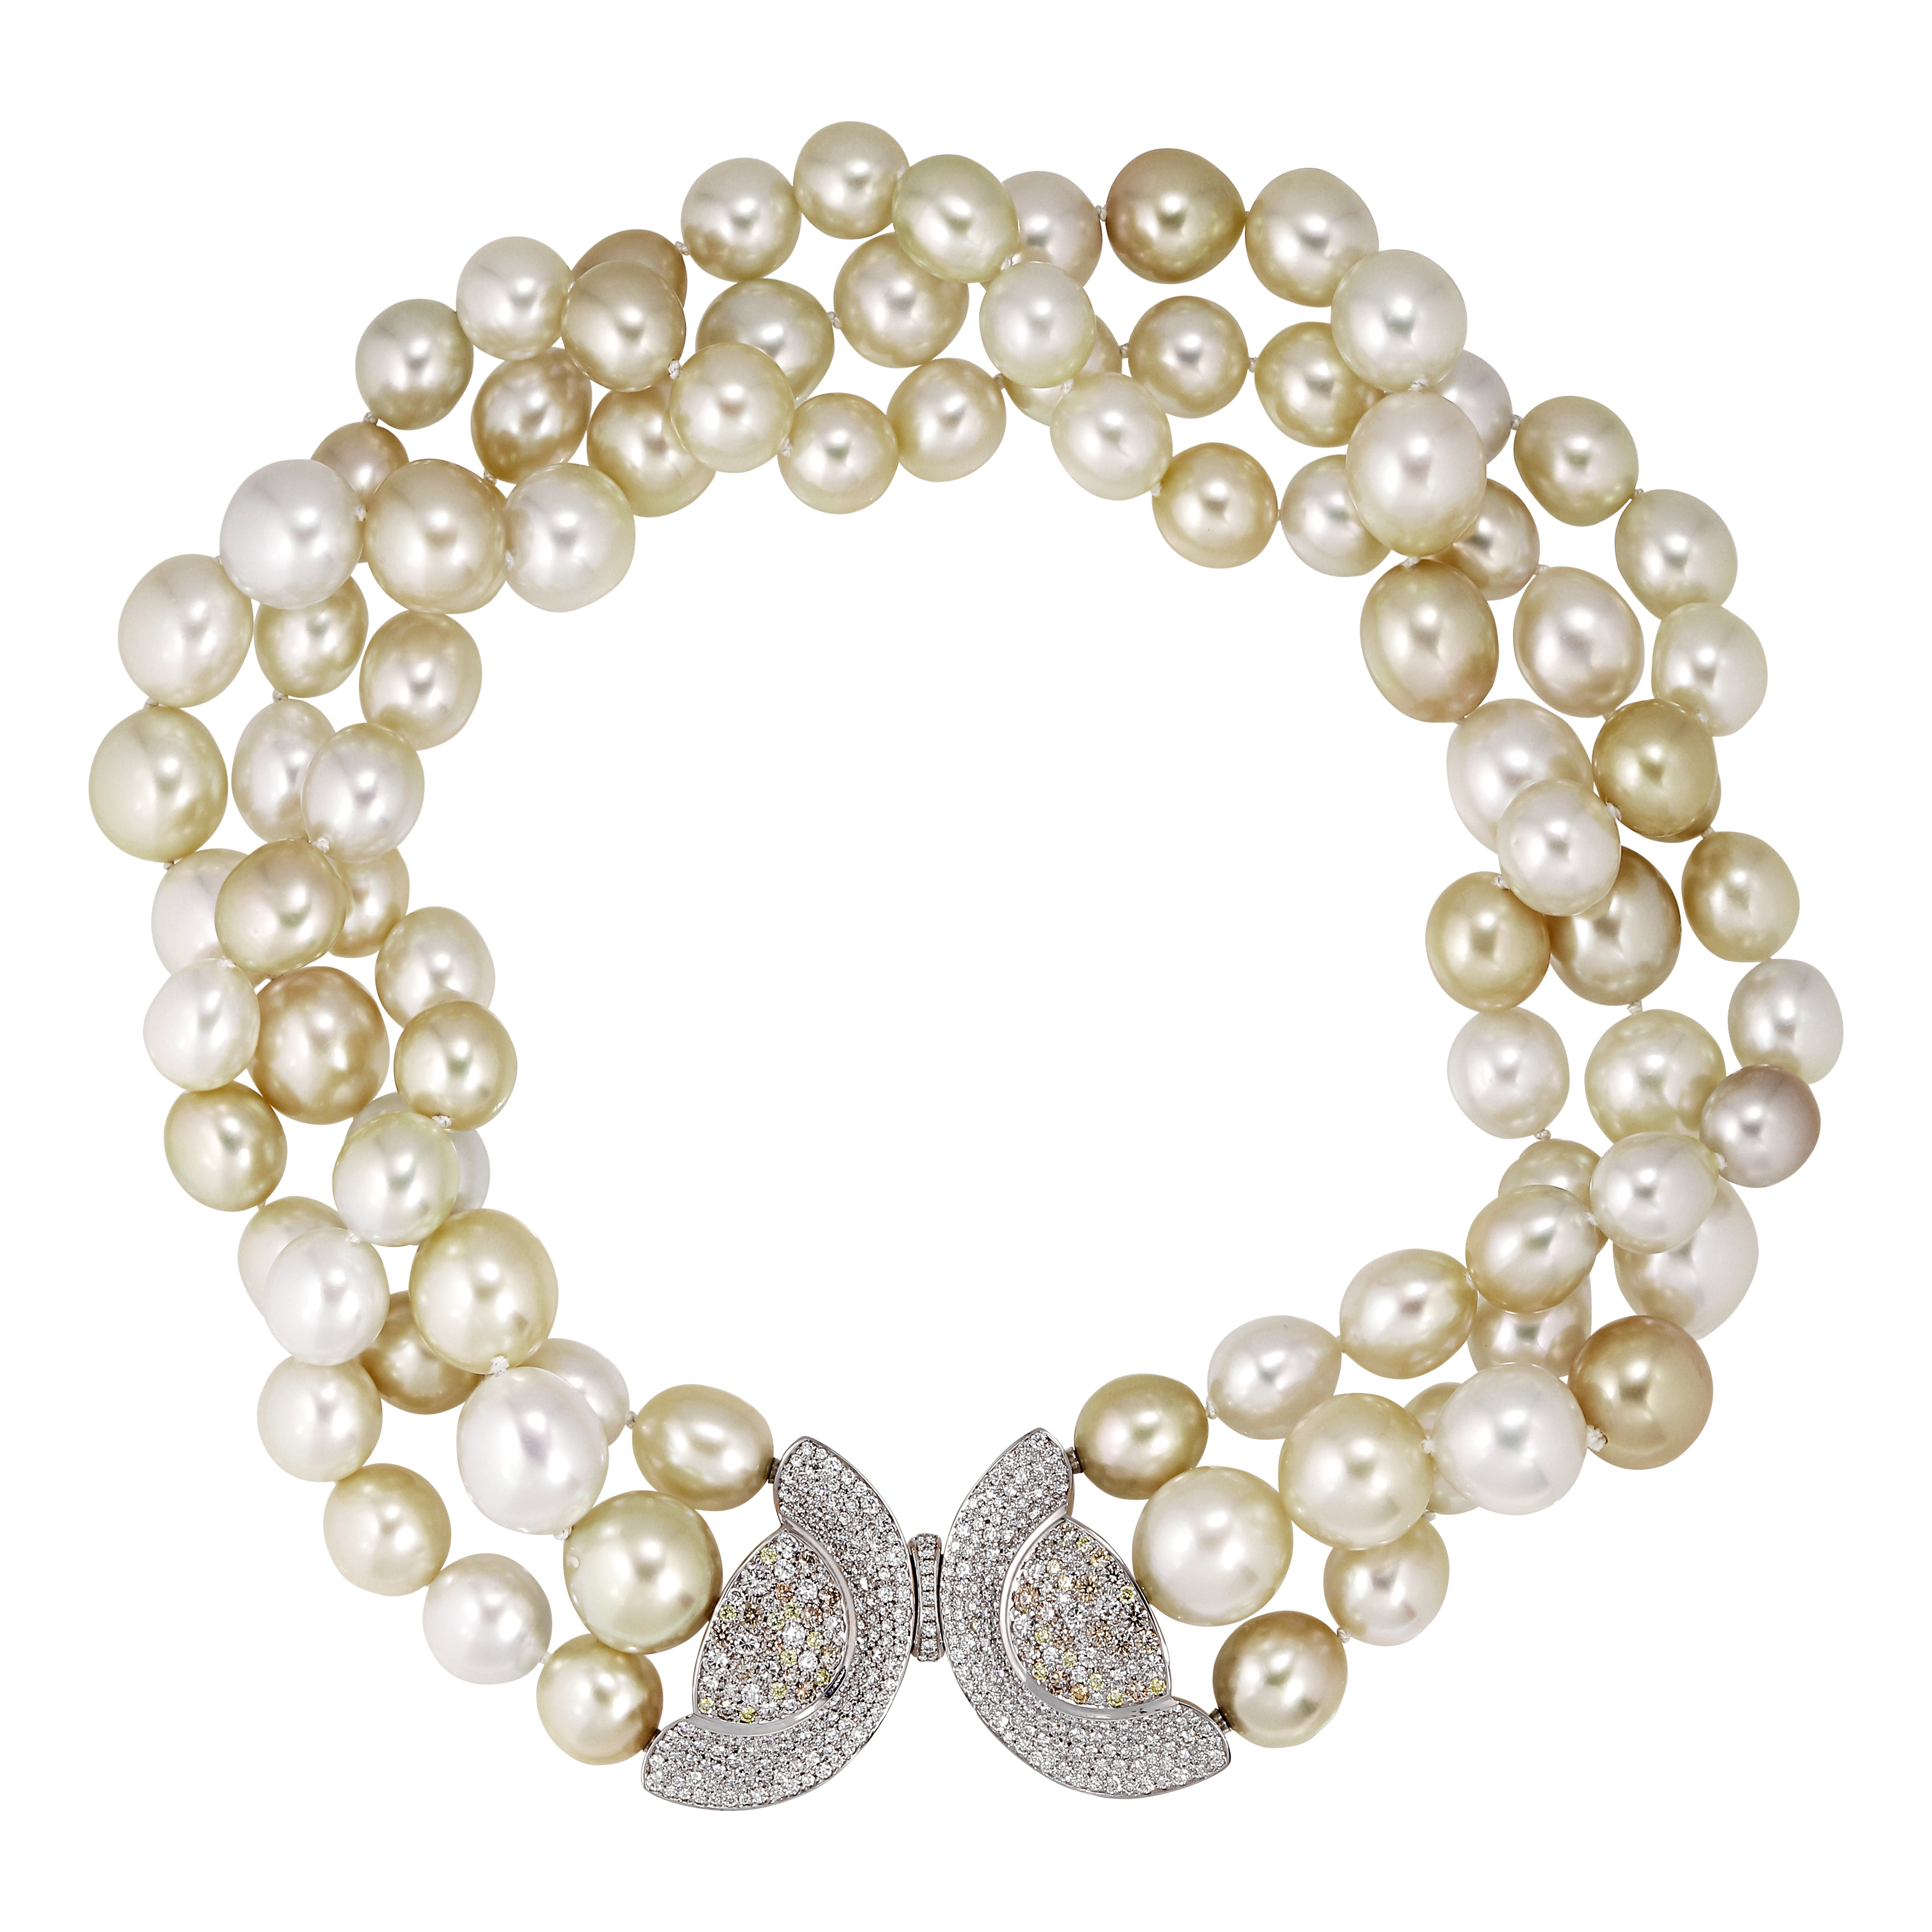 Unique South Sea pearl necklace with diamond pearl clasp